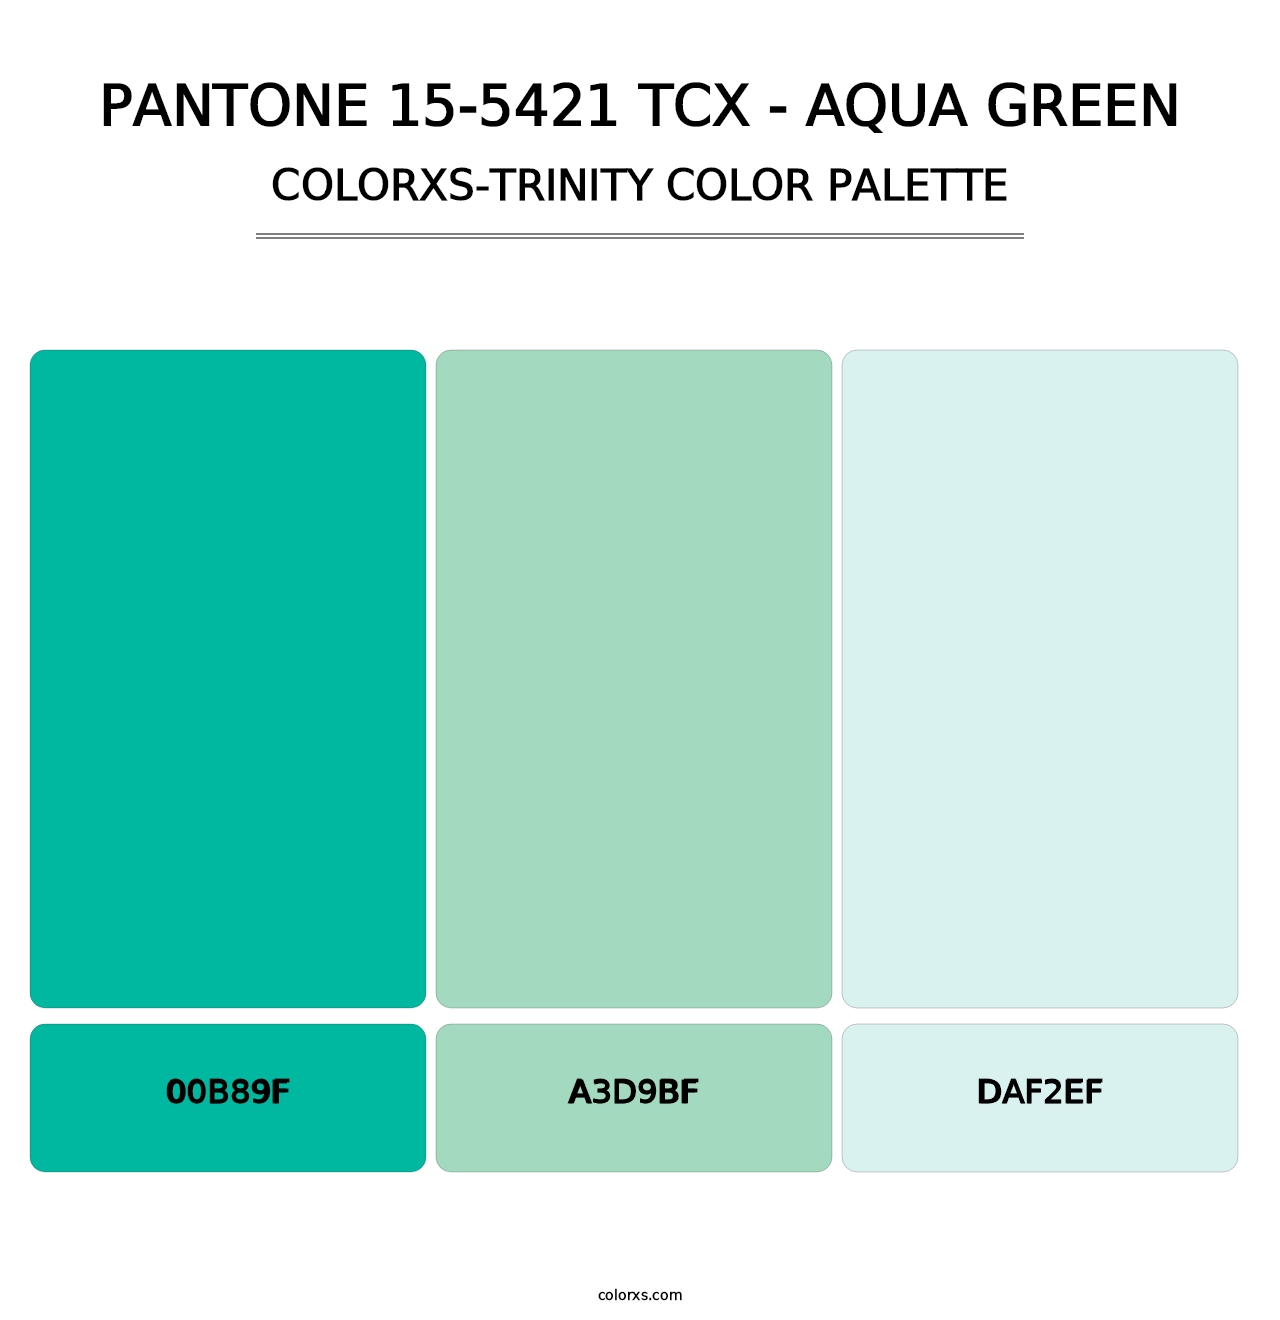 PANTONE 15-5421 TCX - Aqua Green - Colorxs Trinity Palette